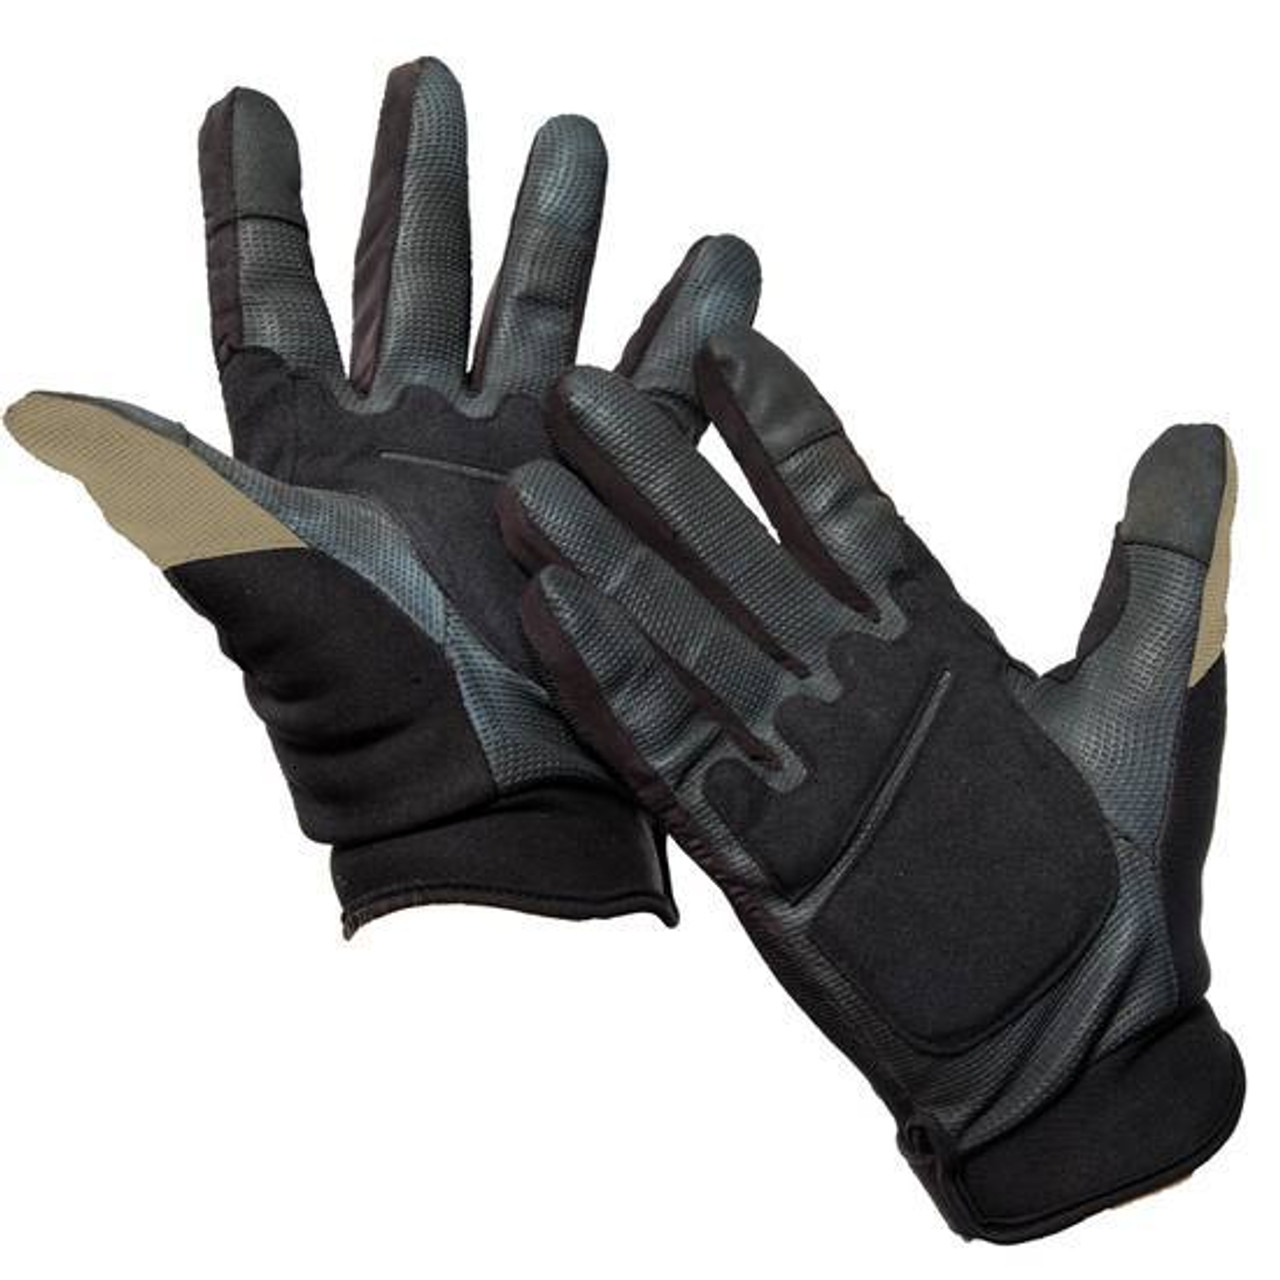 Caldwell Shooting Supplies Ultimate Shooting Gloves, Small/Medium